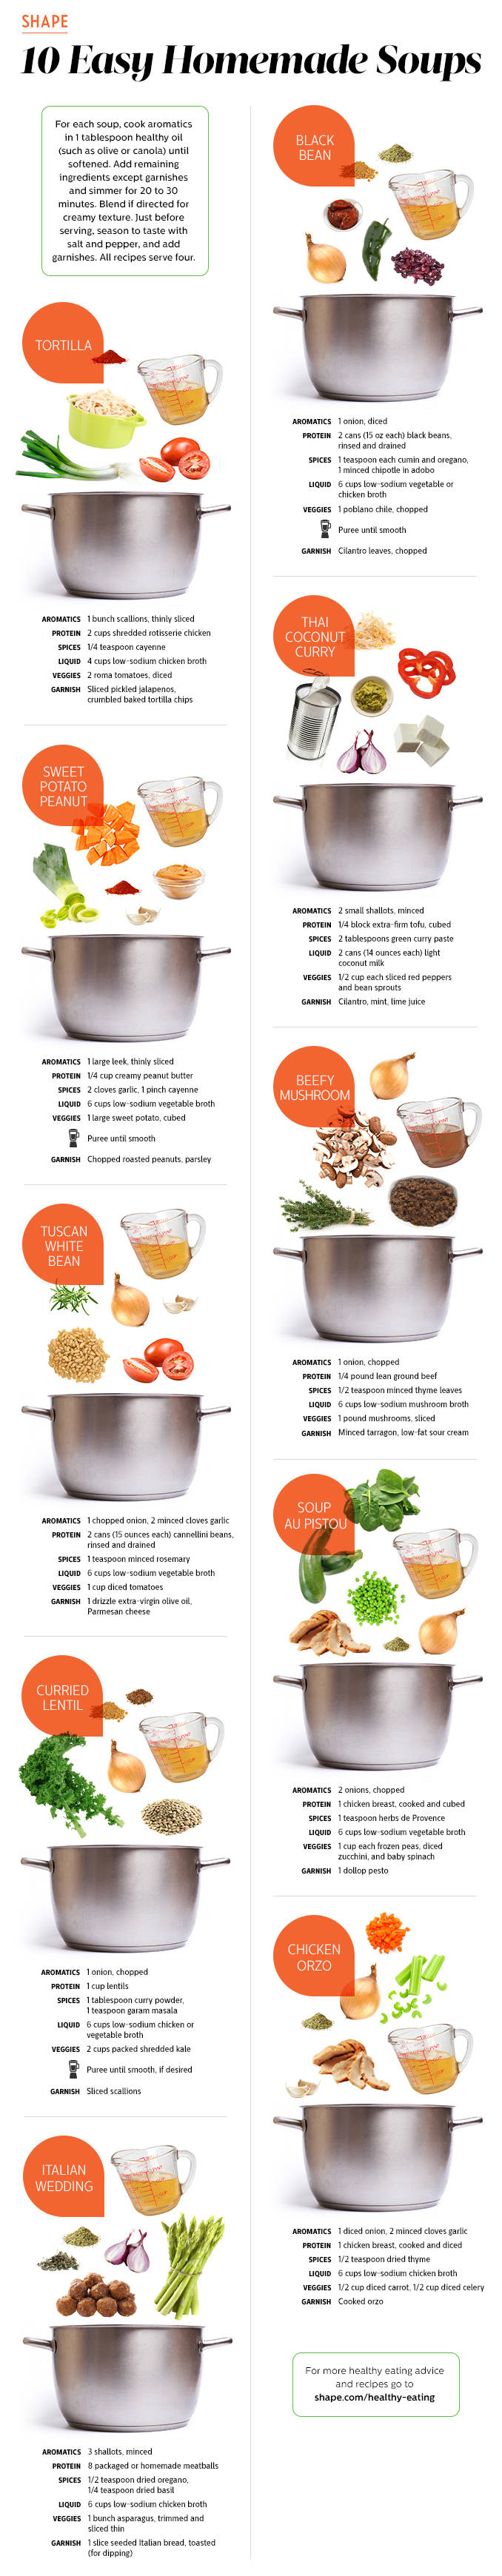 10 Easy Homemade Soups